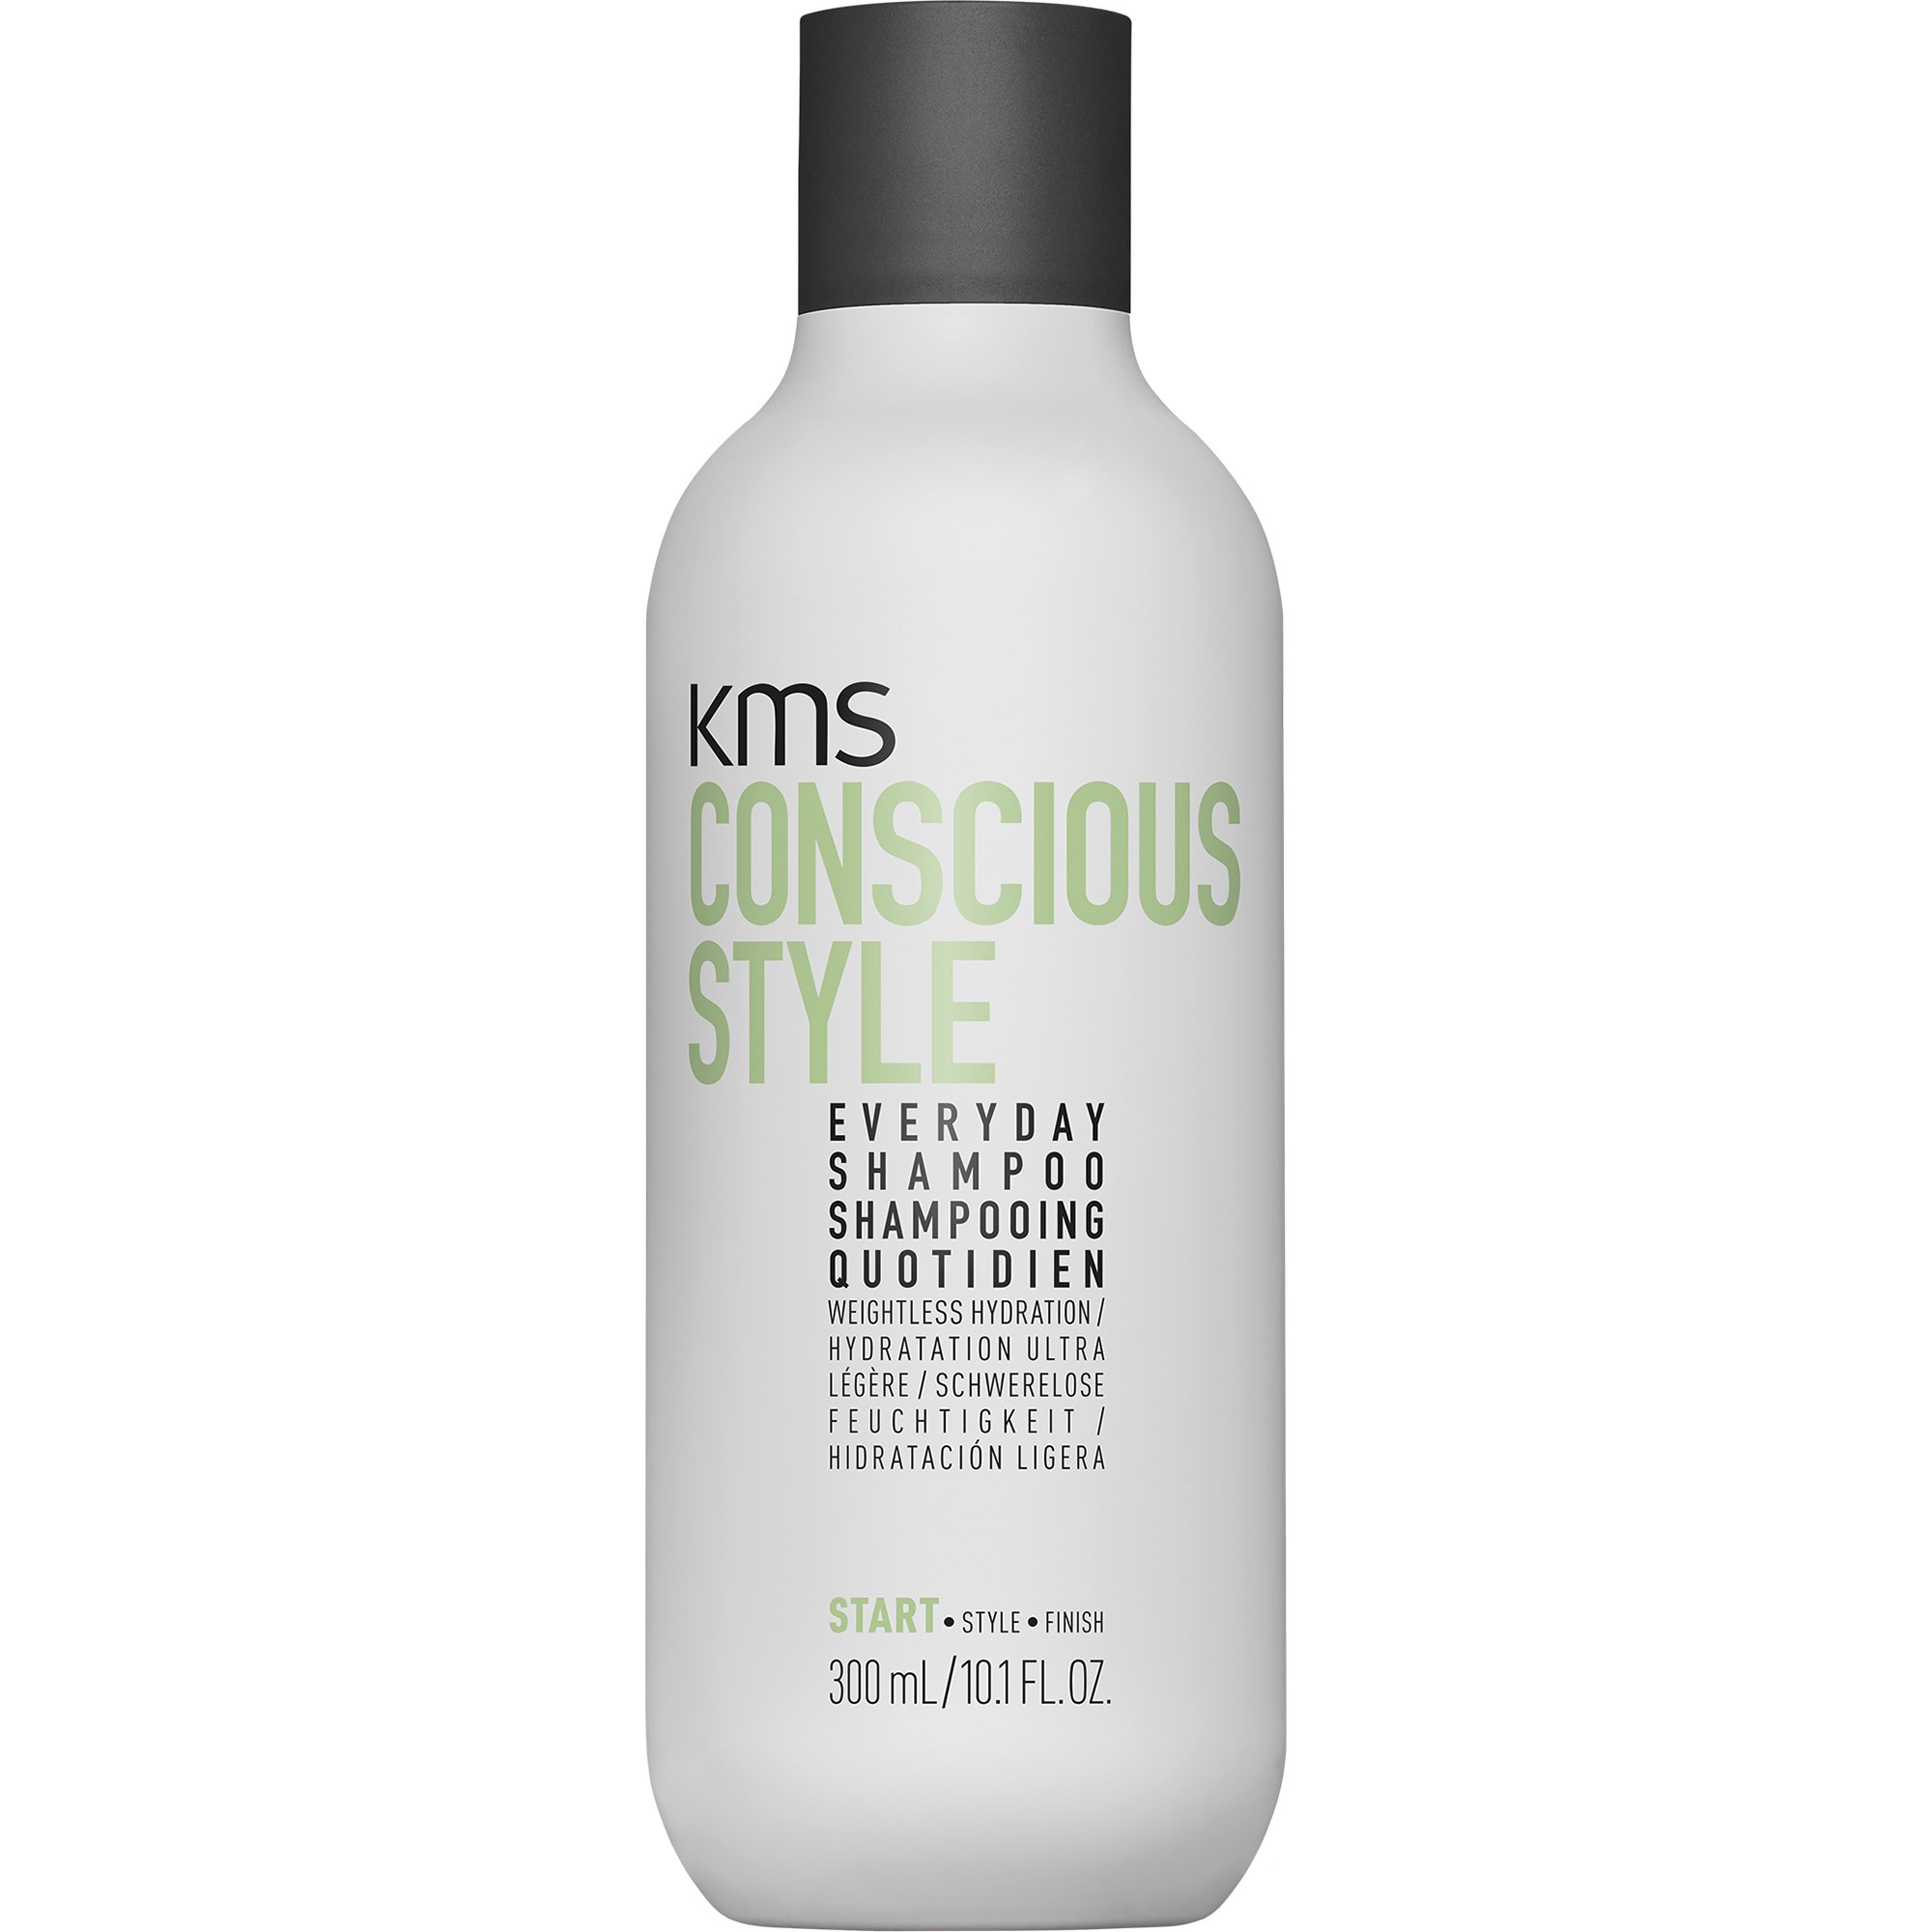 KMS Conscious Style START Everyday Shampoo 300 ml (4044897750040)